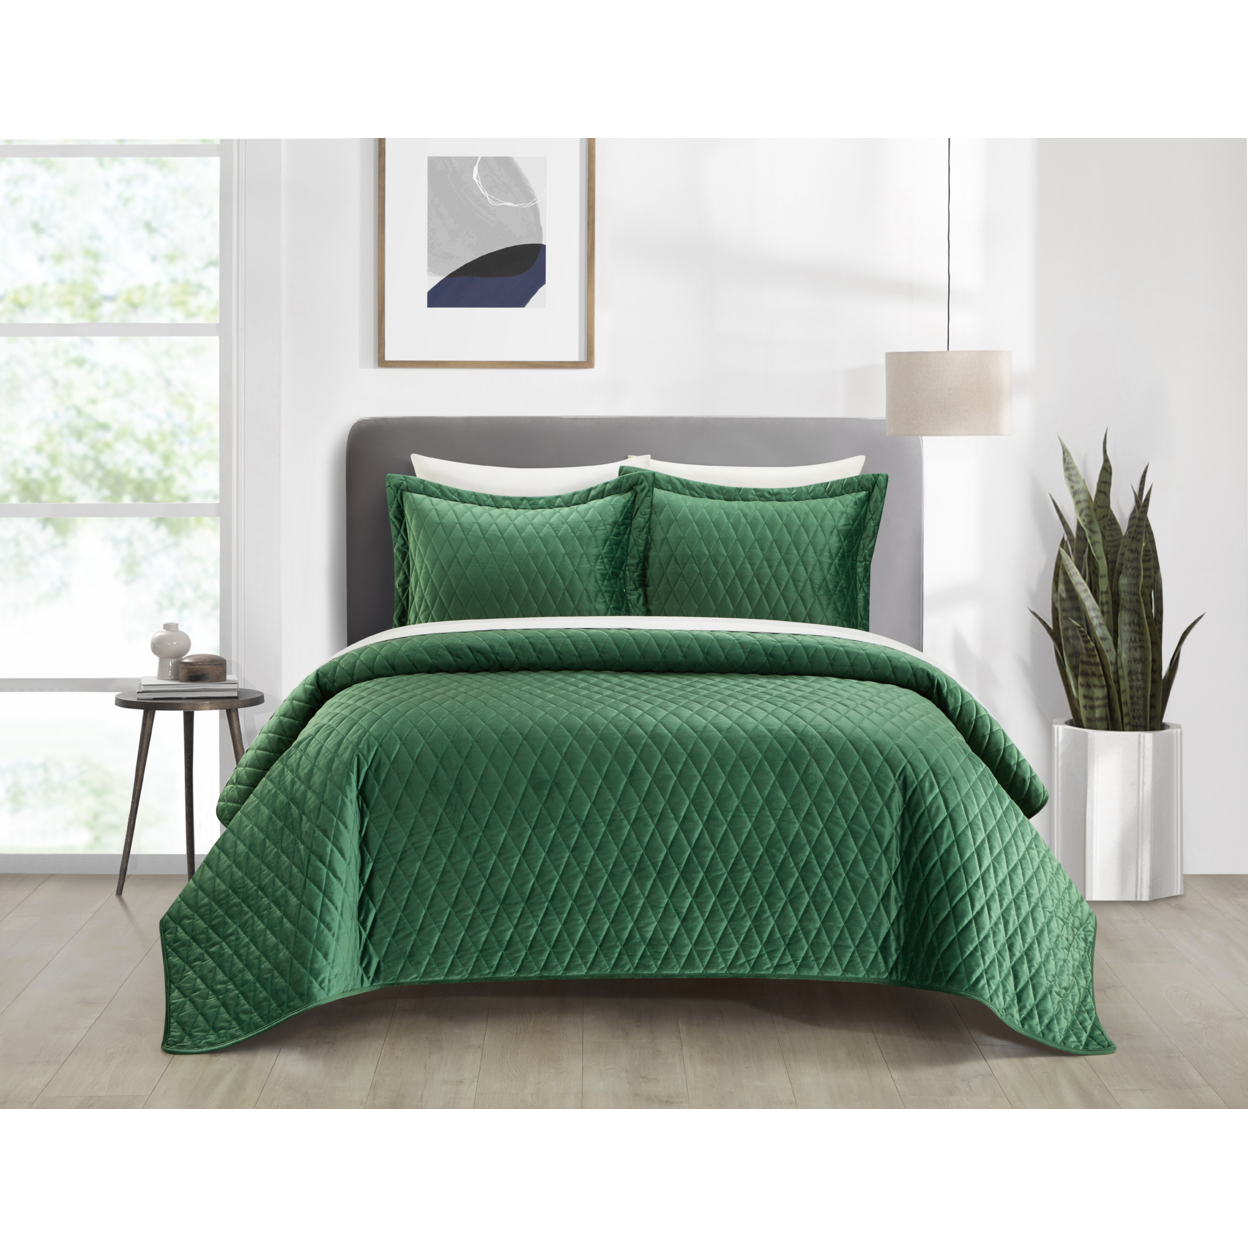 NY&C Home Dafa 3 Piece Velvet Quilt Set Diamond Stitched Pattern Bedding - Green, Queen